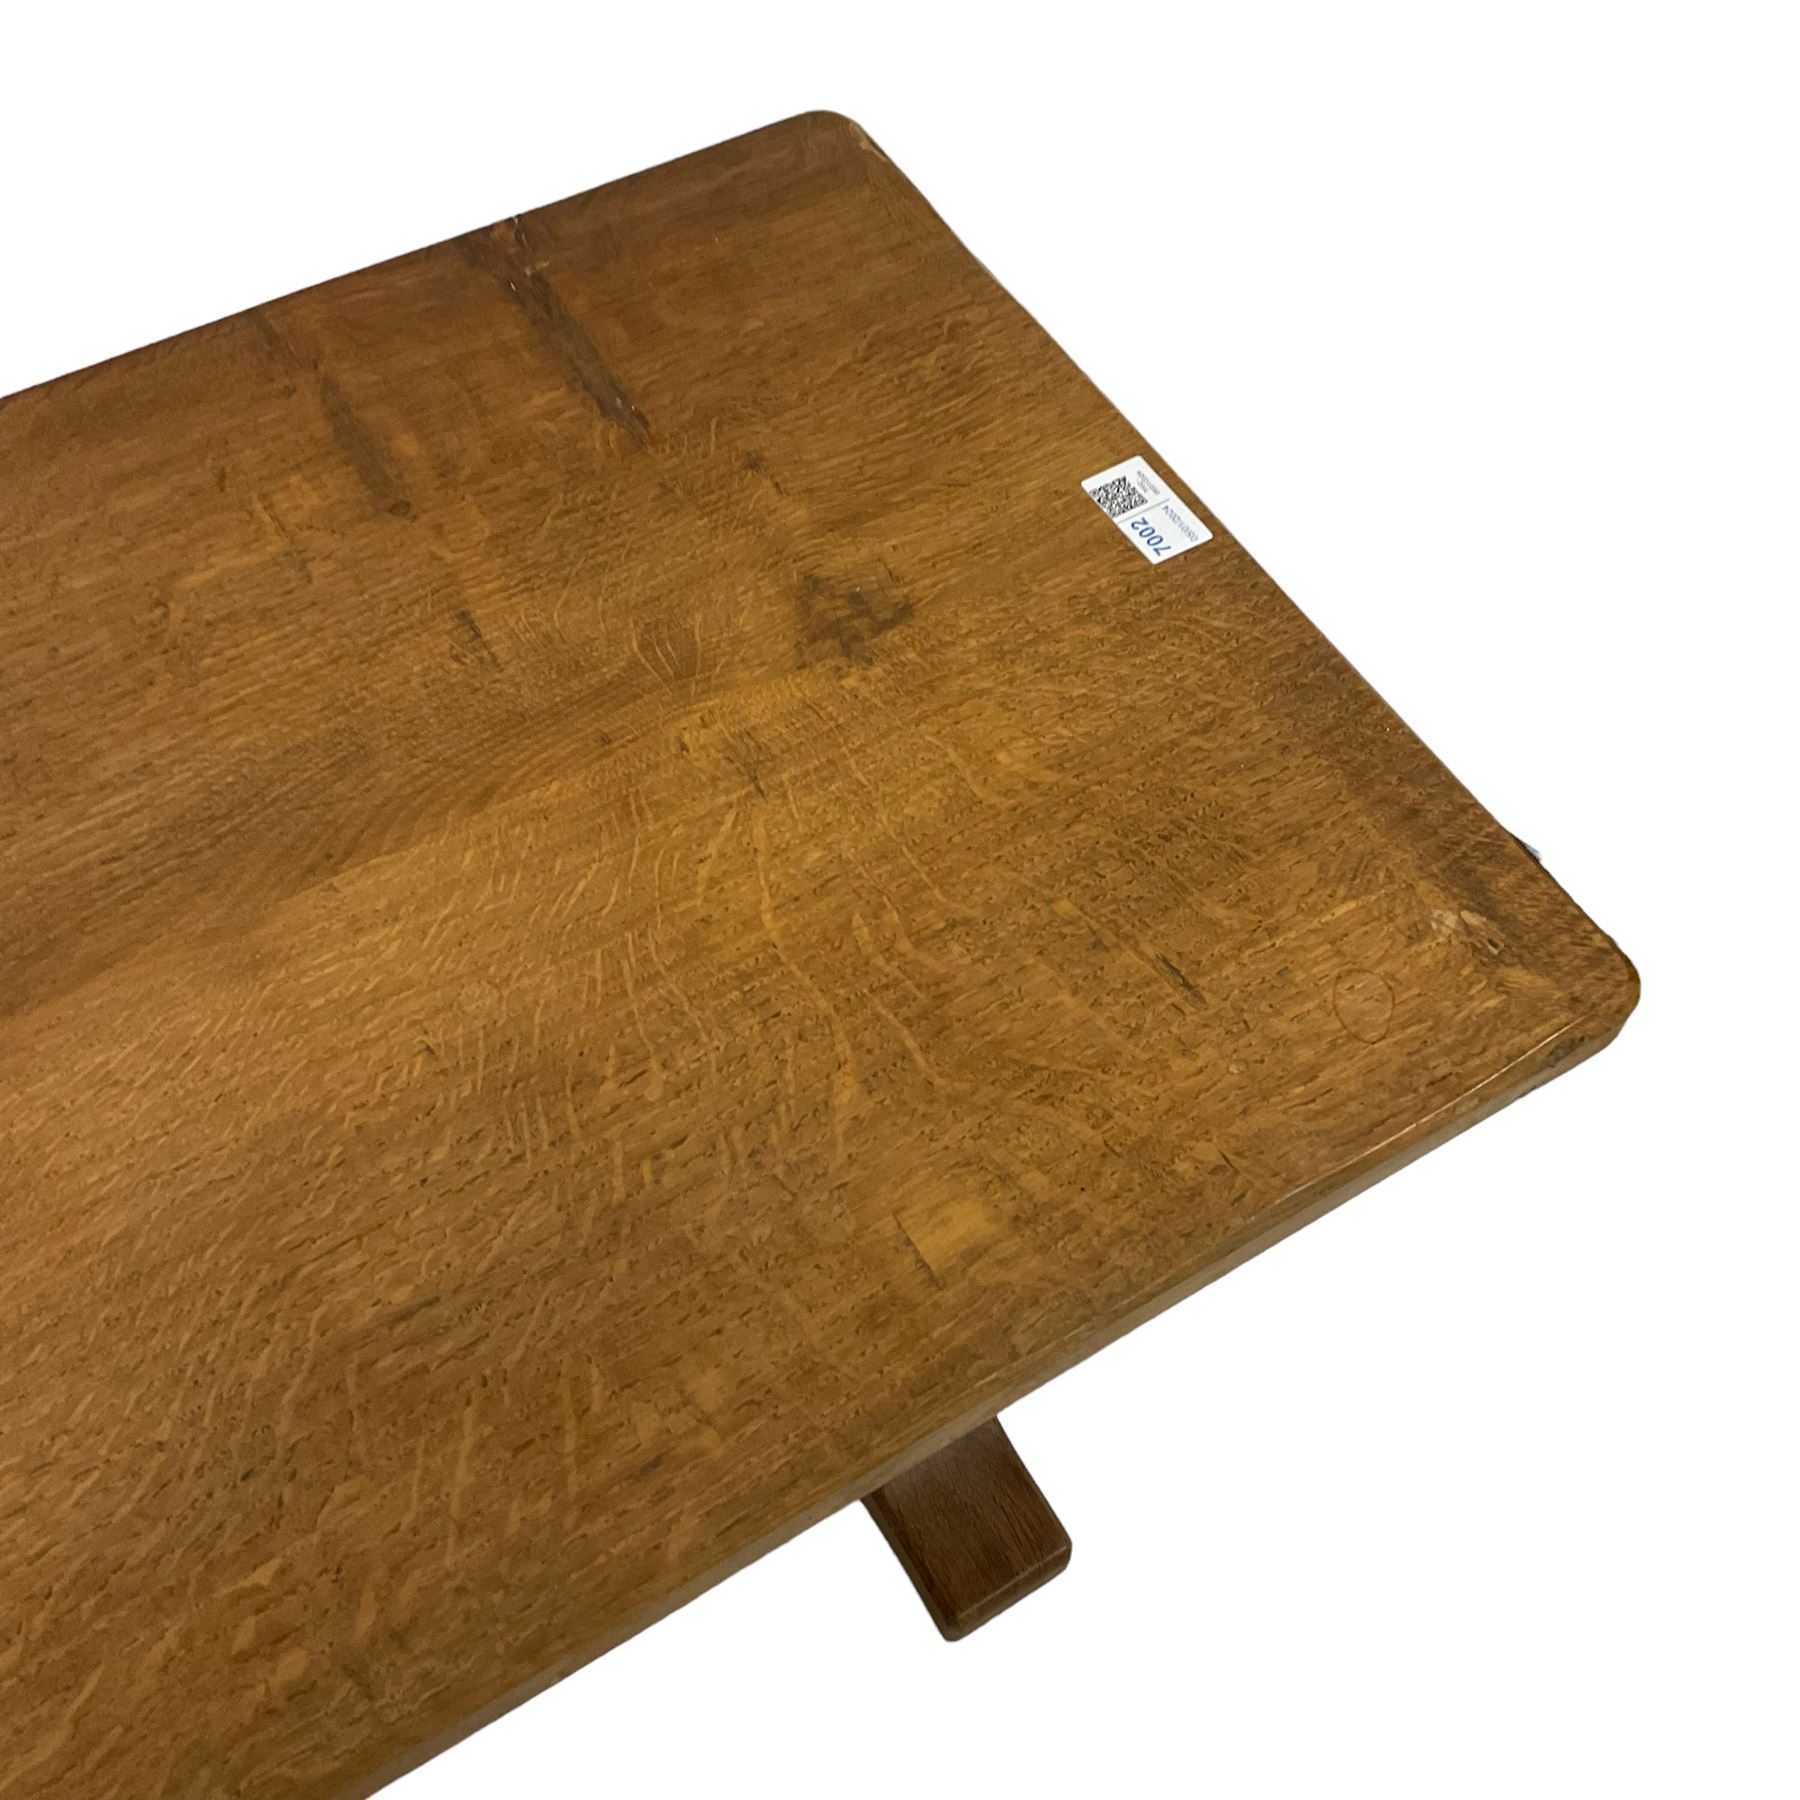 Acornman - oak coffee table - Image 4 of 5